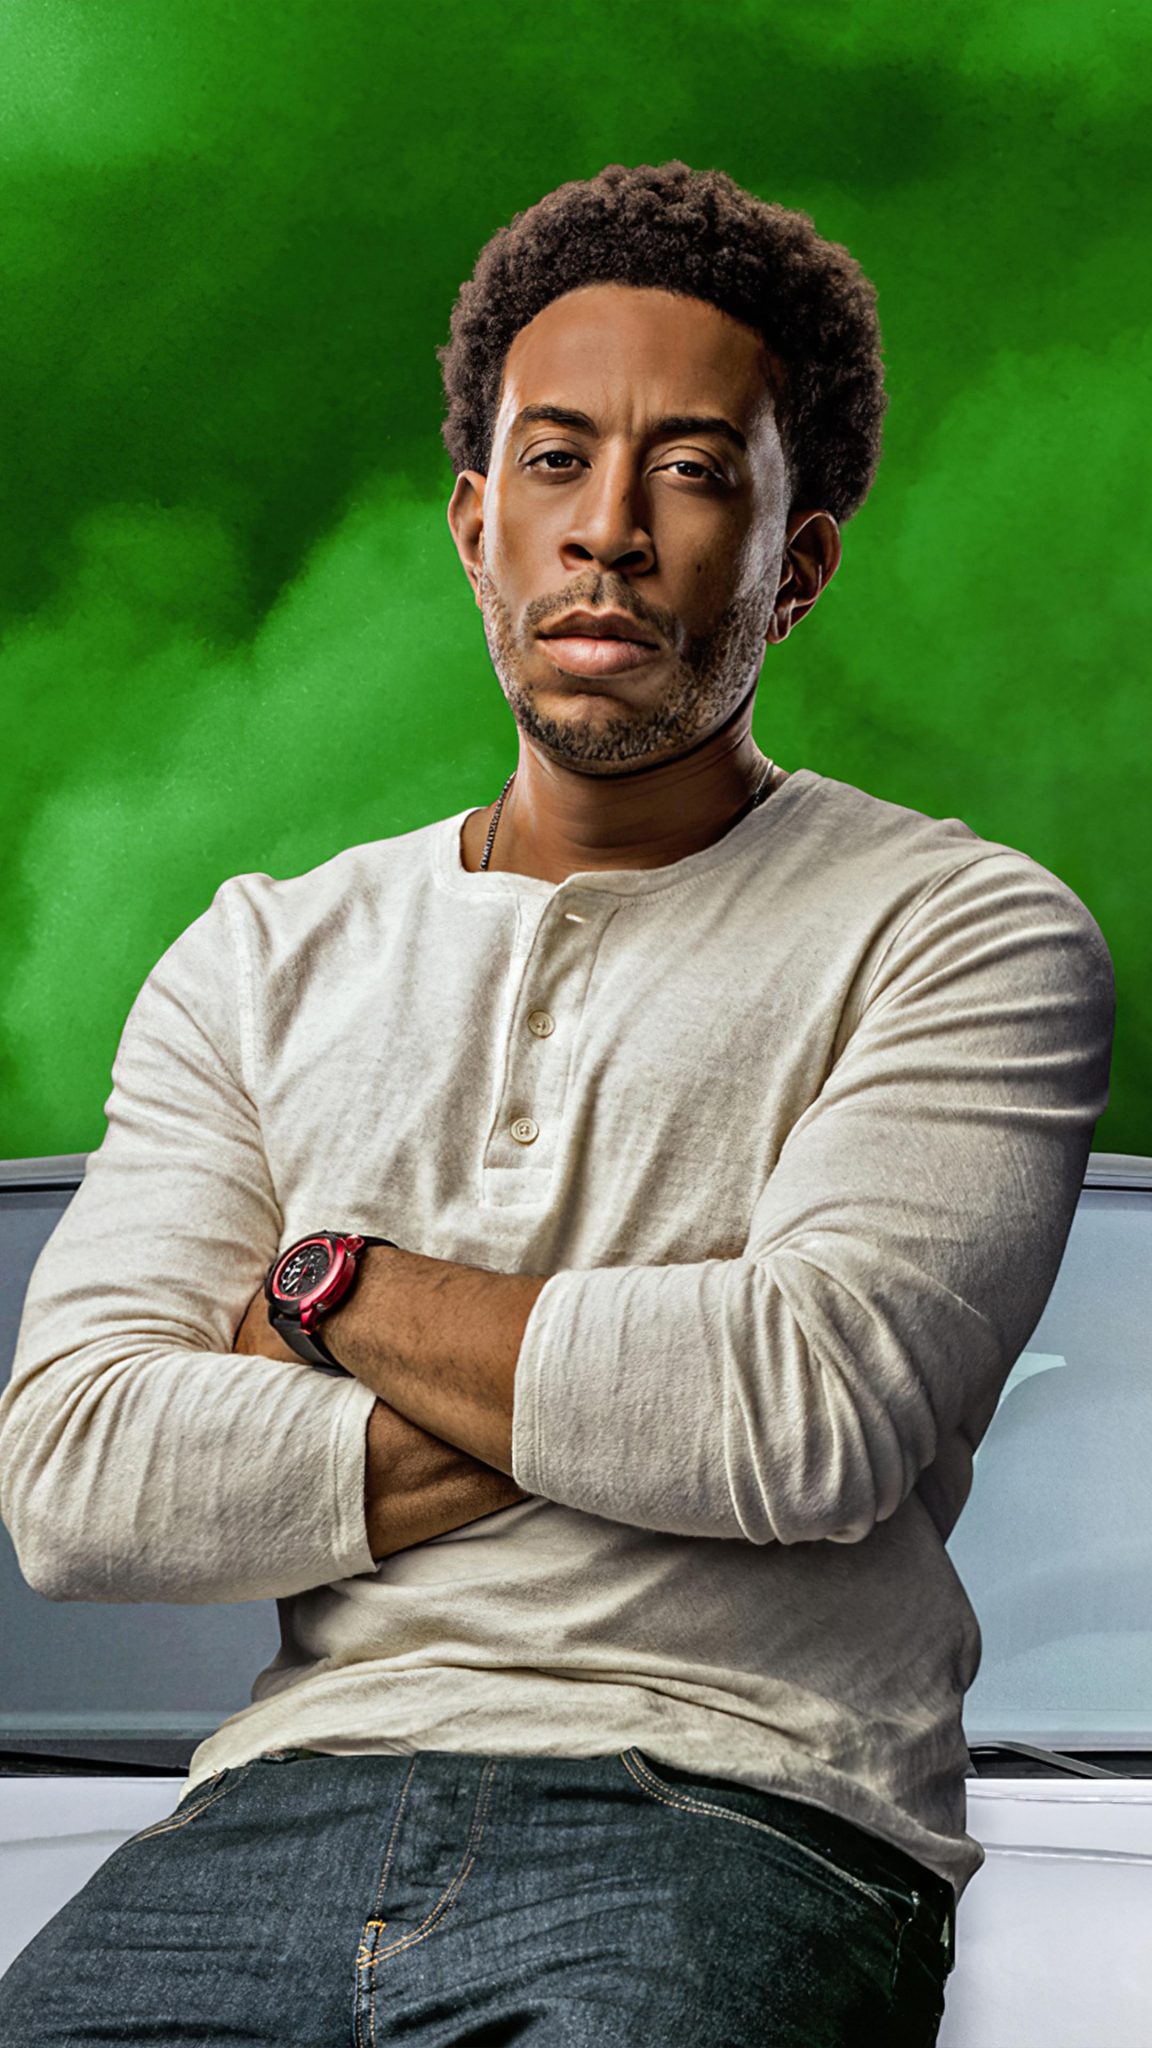 Ludacris In F9 The Fast Saga Free 4K Ultra HD Mobile Wallpaper